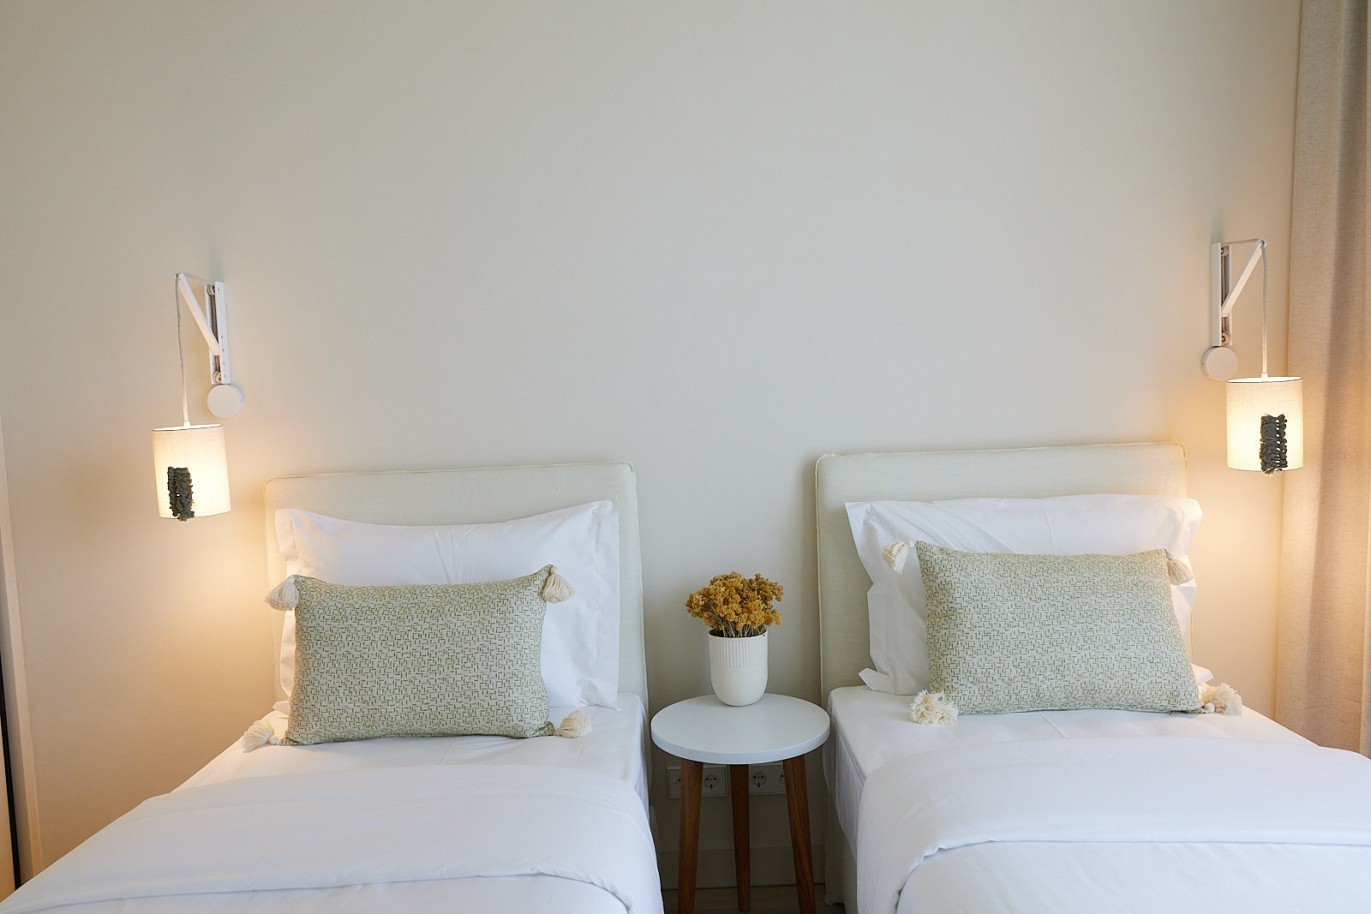 2 bedroom apartment in resort, for sale in Porches, Algarve_228897